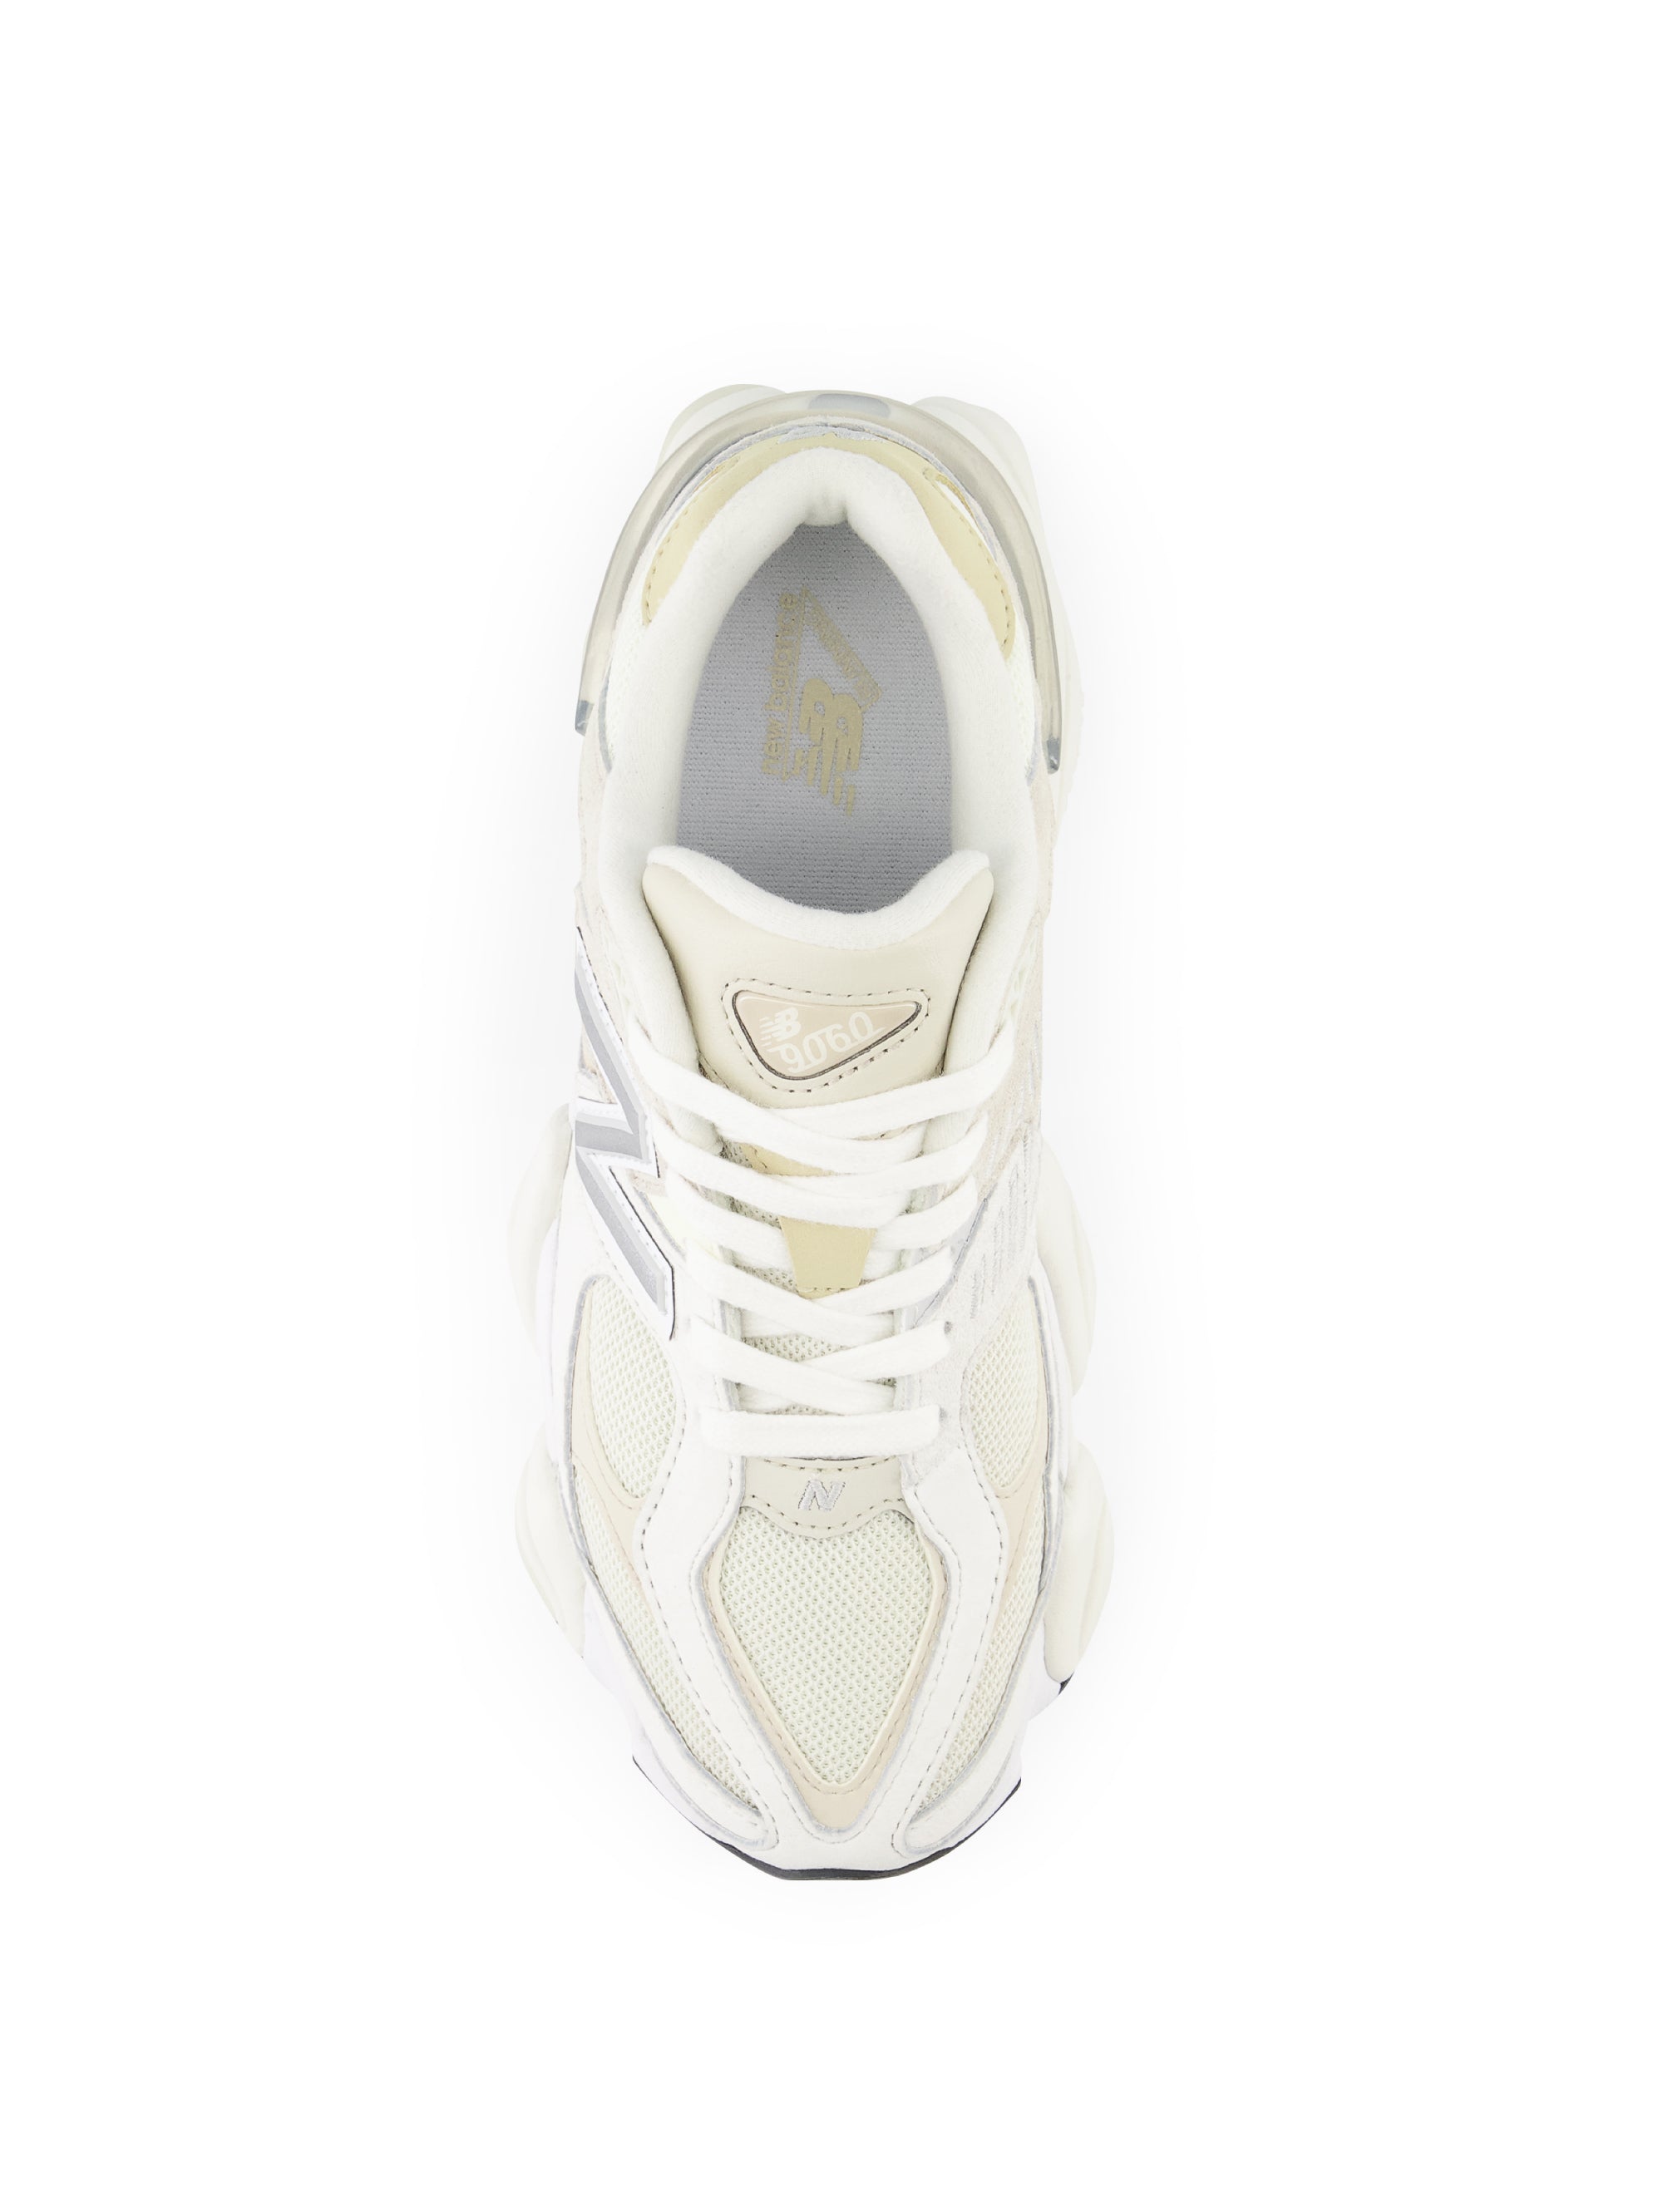 Sneakers da Donna Futuristica 9060 Bianco/Crema